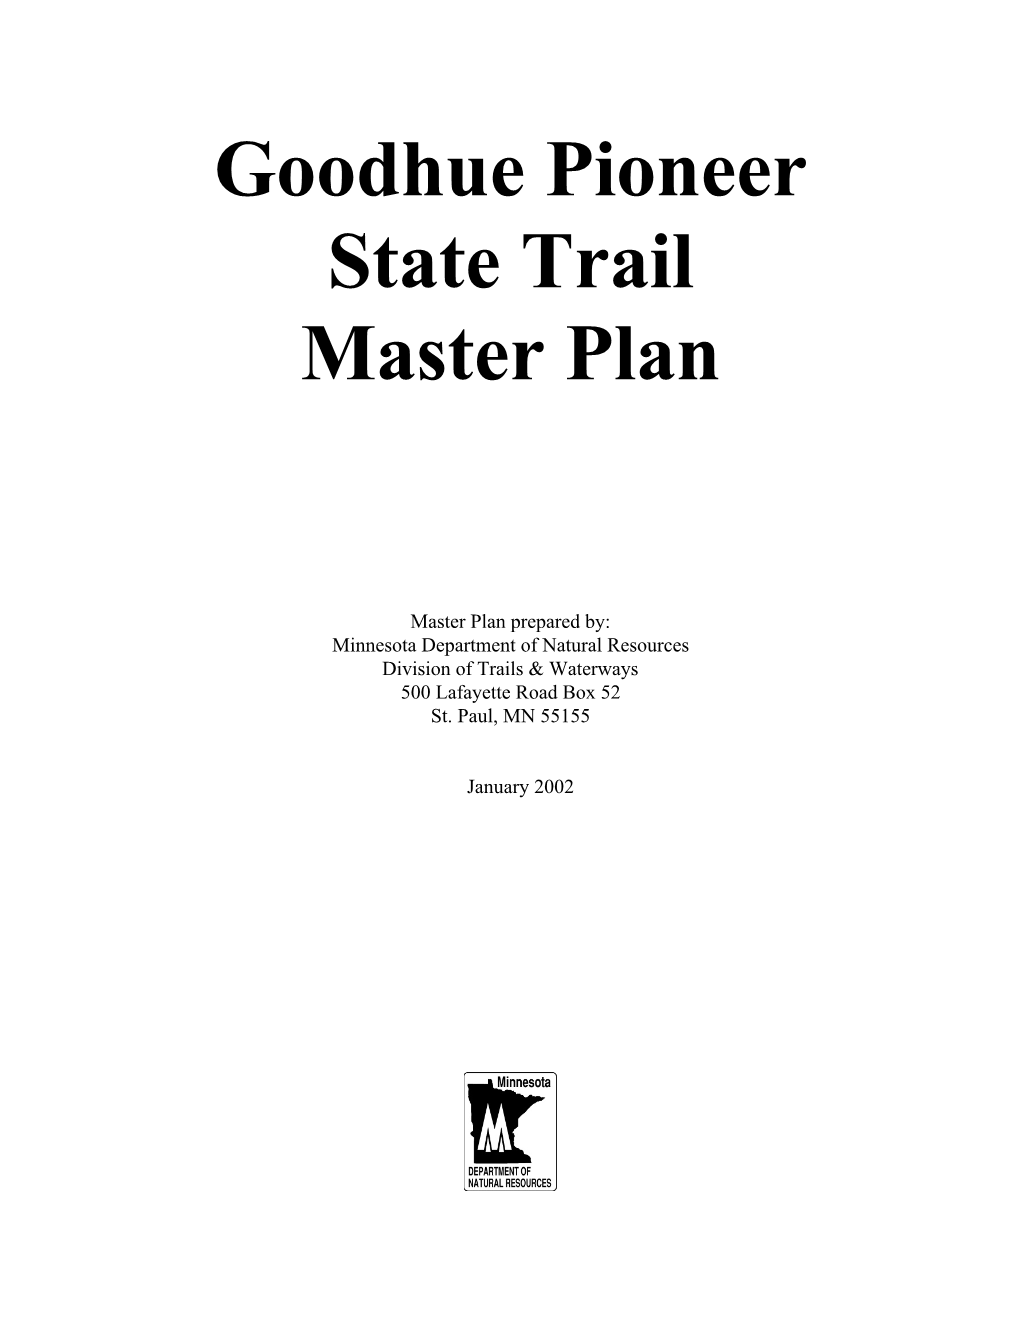 Goodhue Pioneer State Trail Master Plan